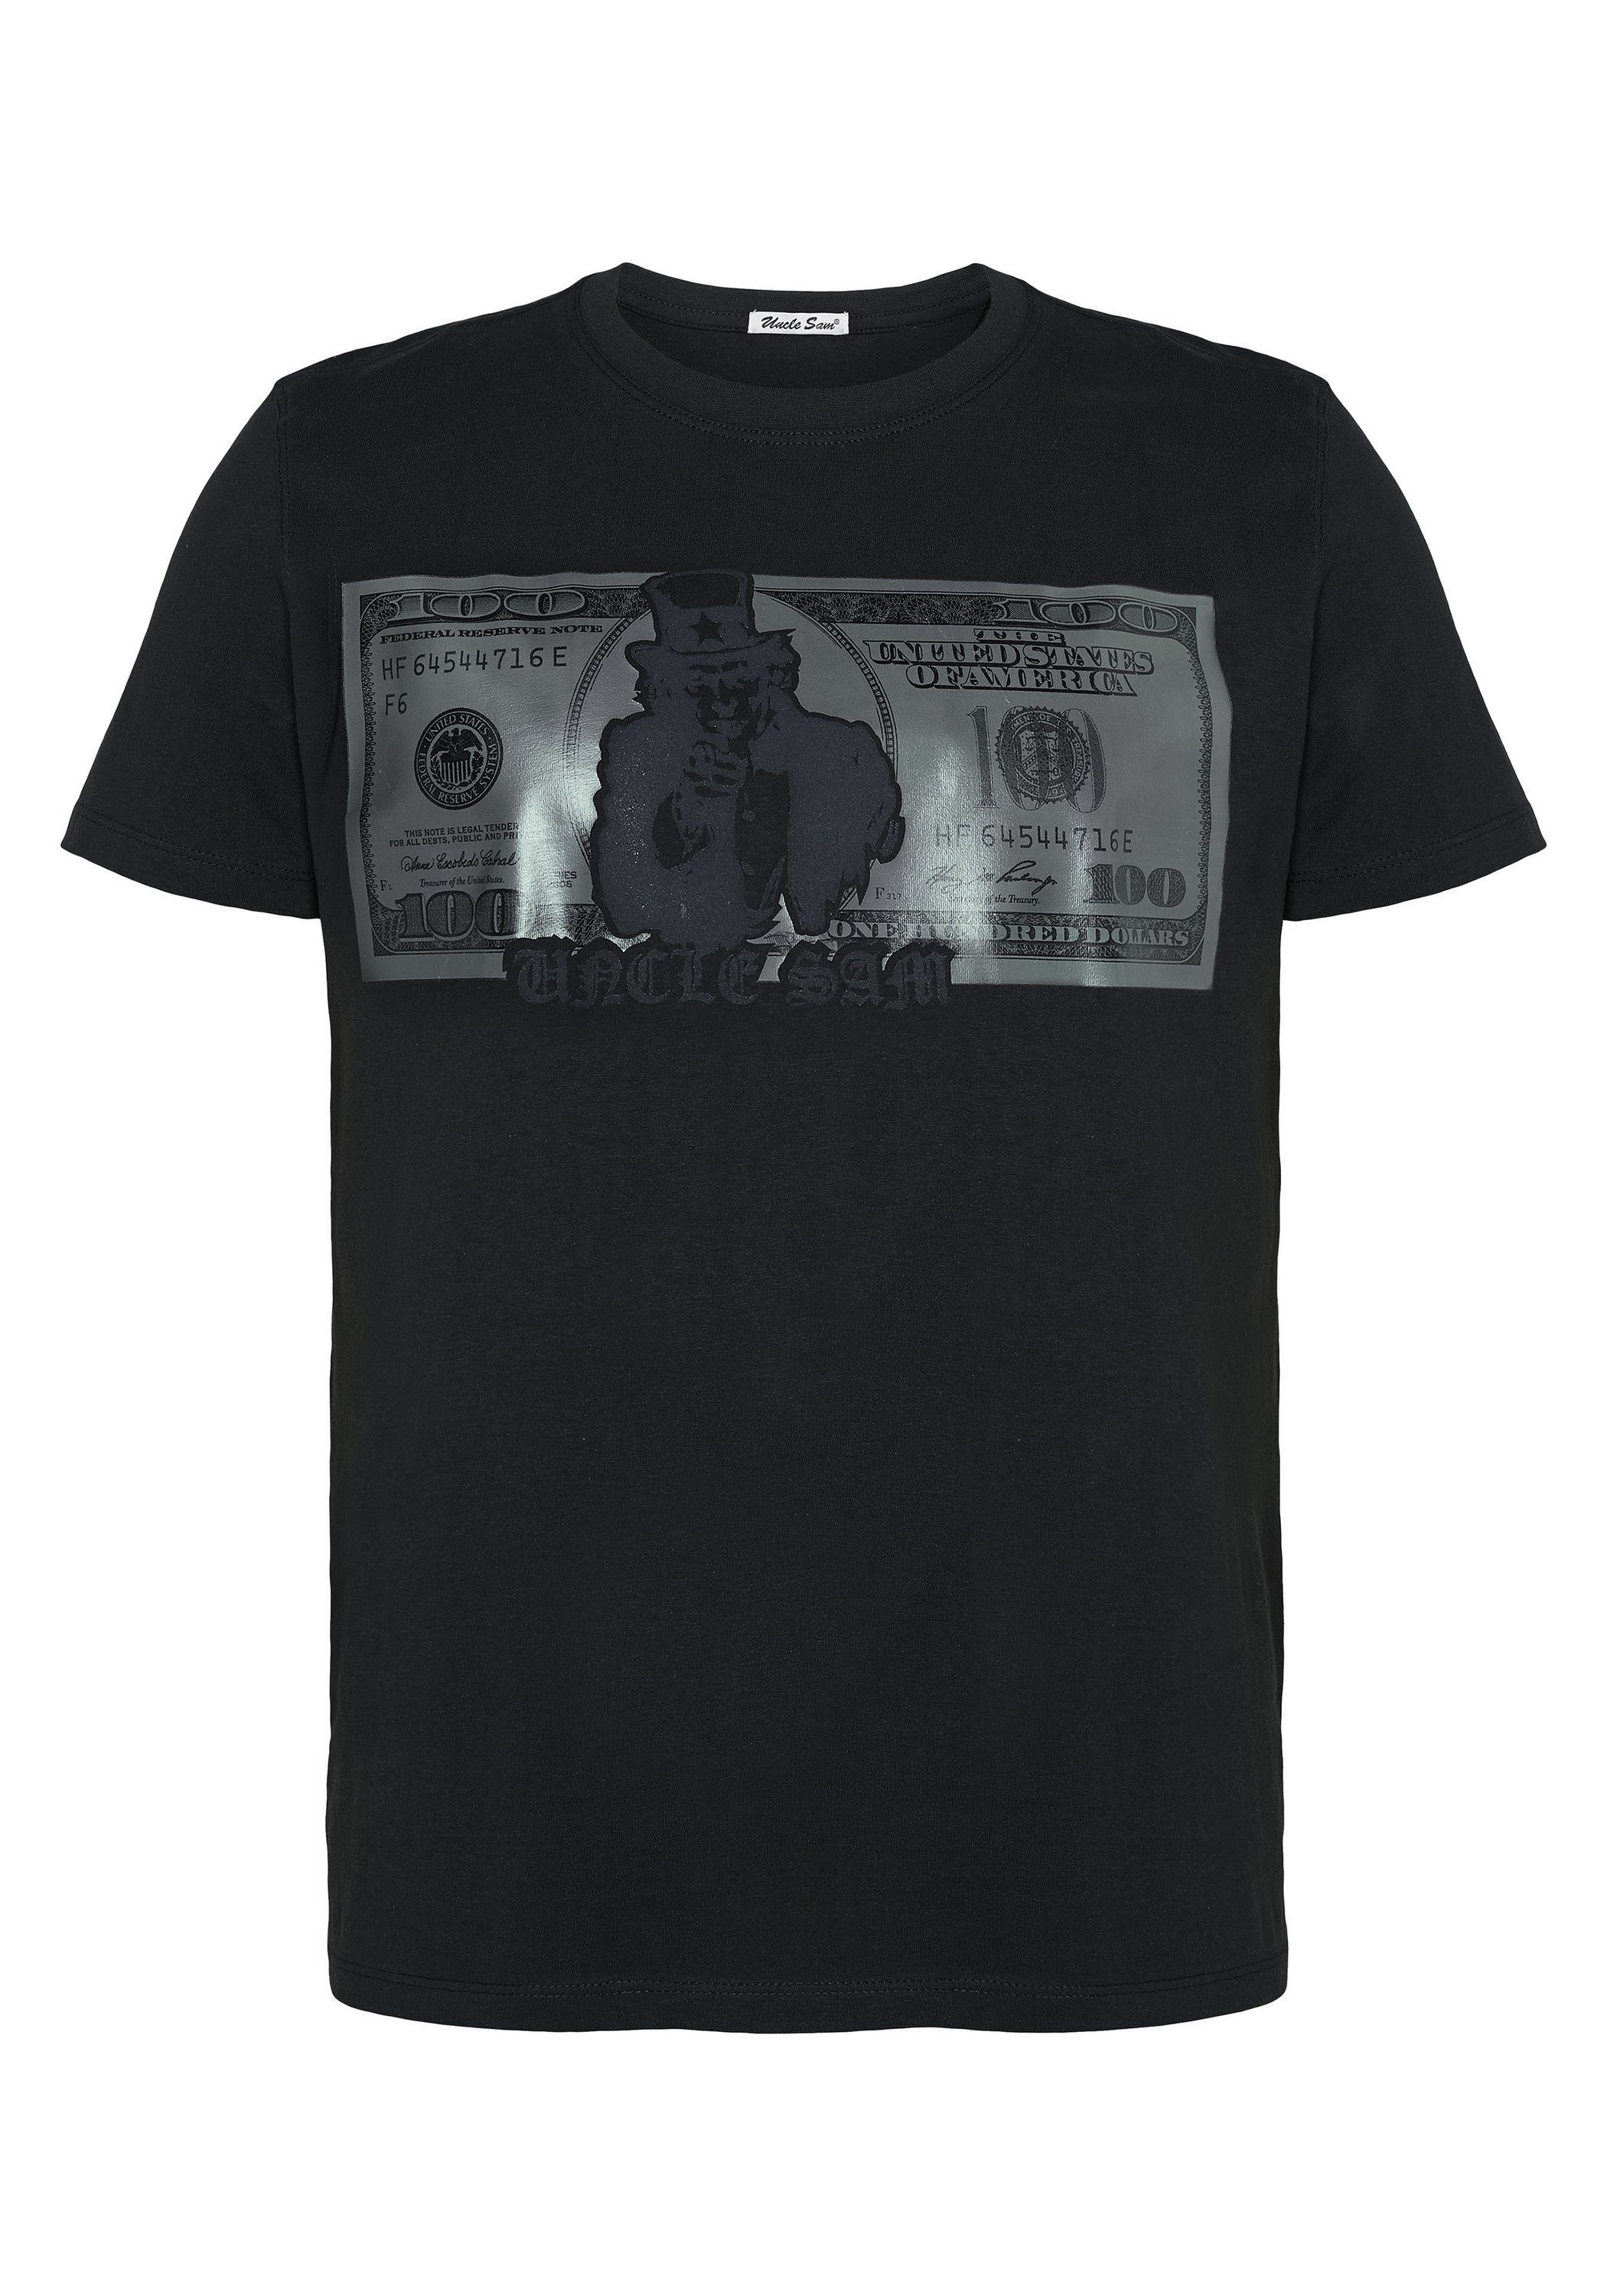 19-3911 Print-Shirt Frontprint Uncle Sam Deep mit Black